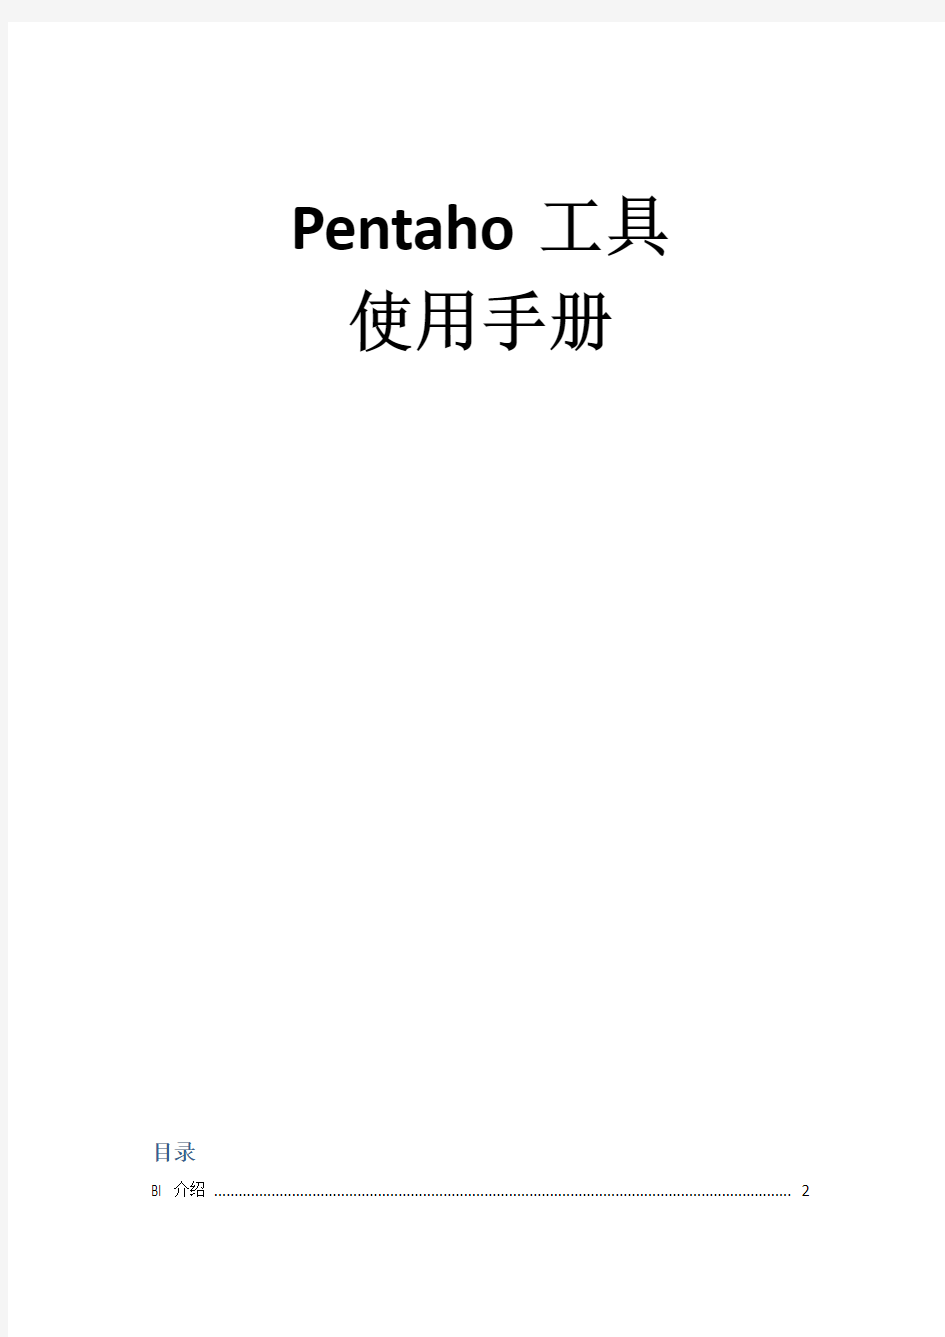 pentaho 4.5工具使用手册